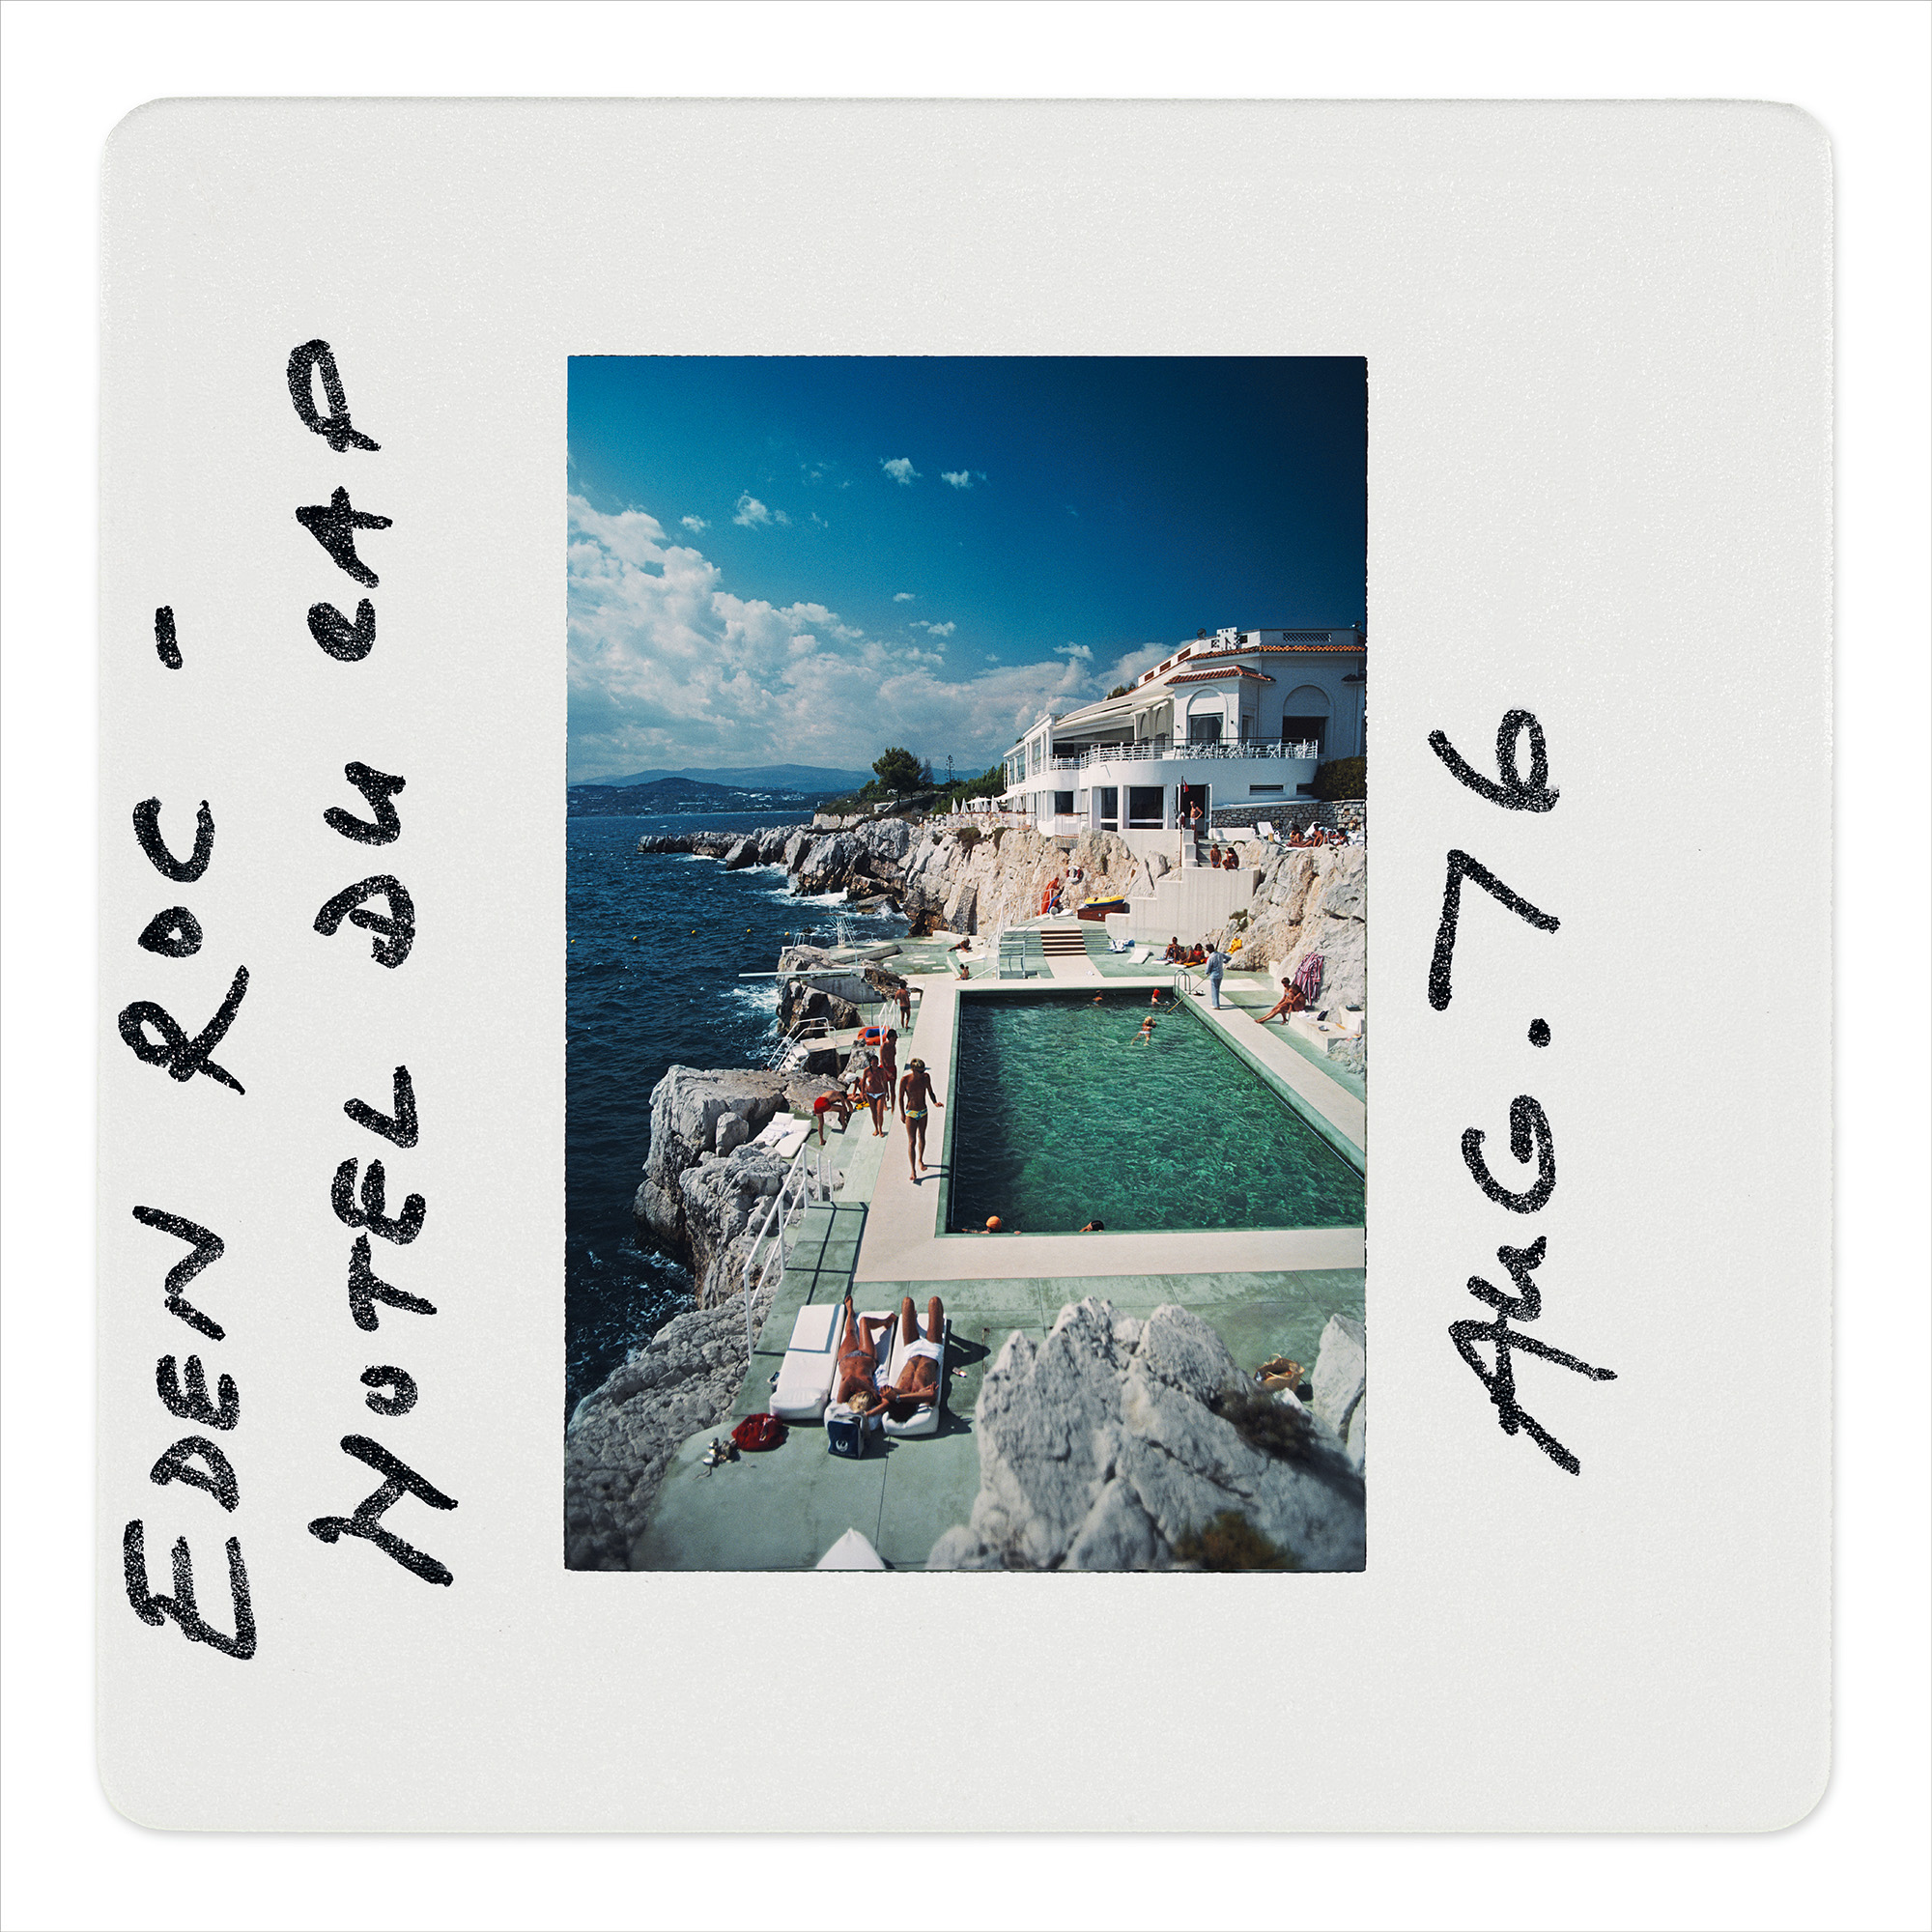 Hotel du Cap Eden-Roc – Slide fine art photography